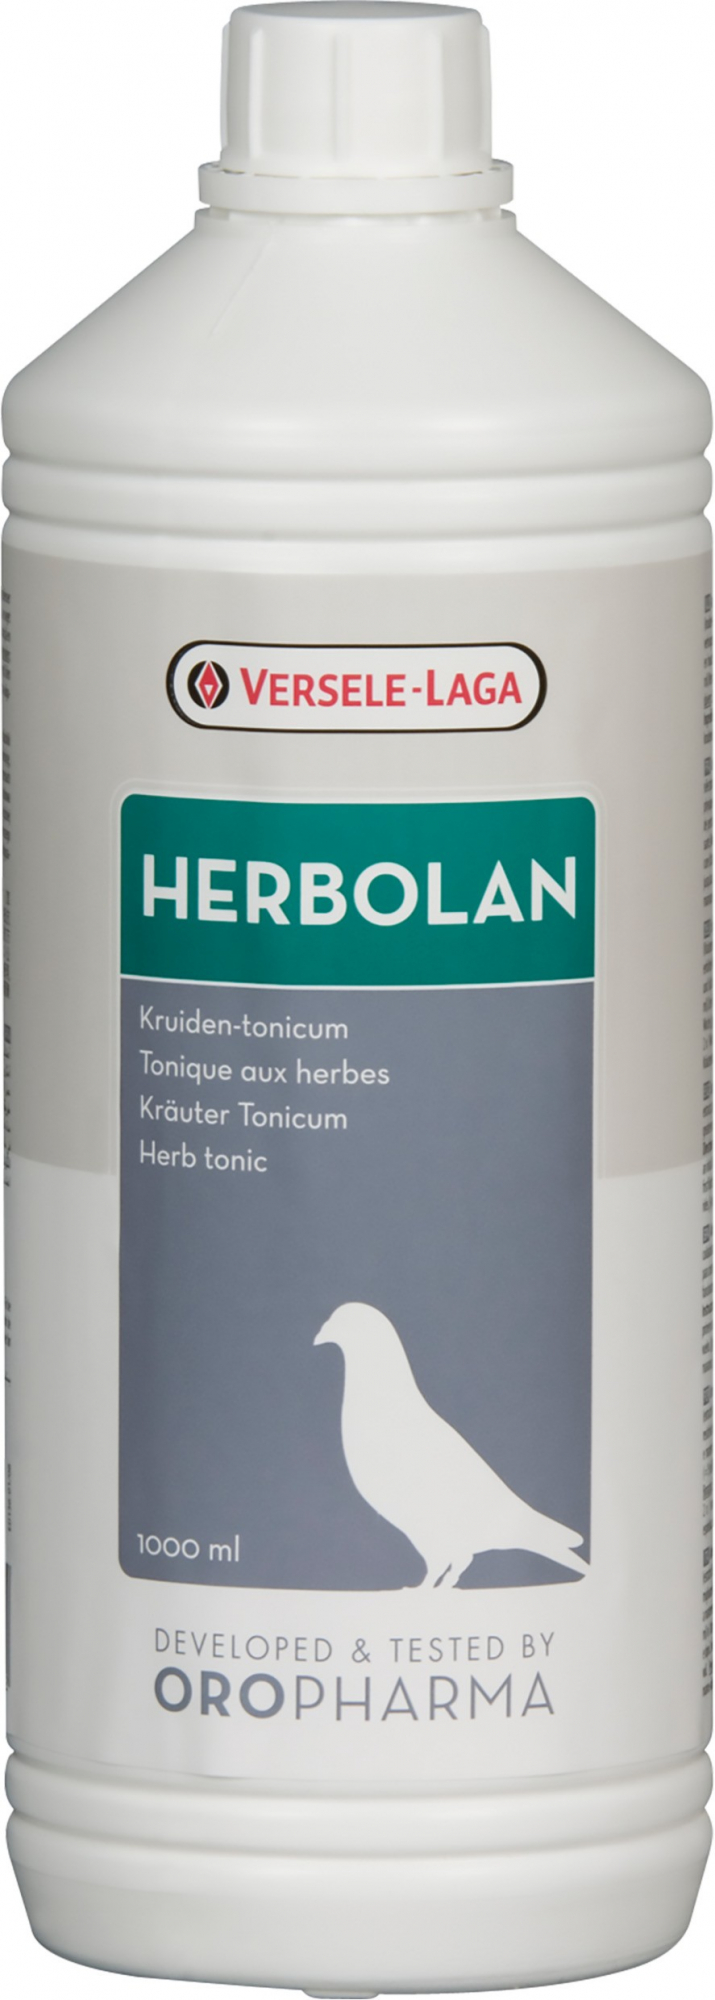 Oropharma Herbolan Kräutertonikum, Fitness und Ausdauer